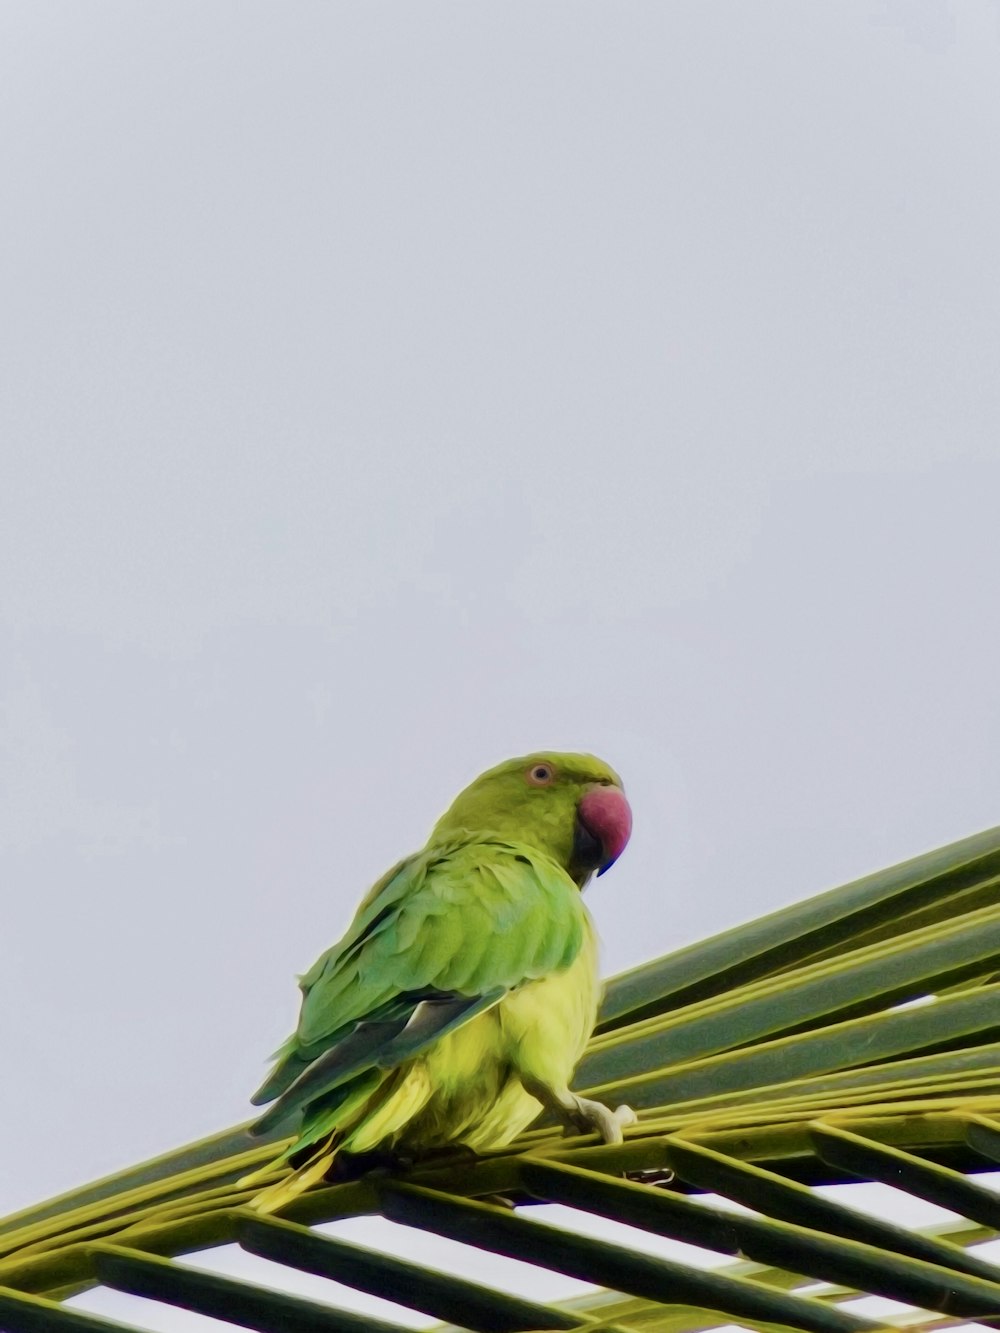 green bird on brown stick